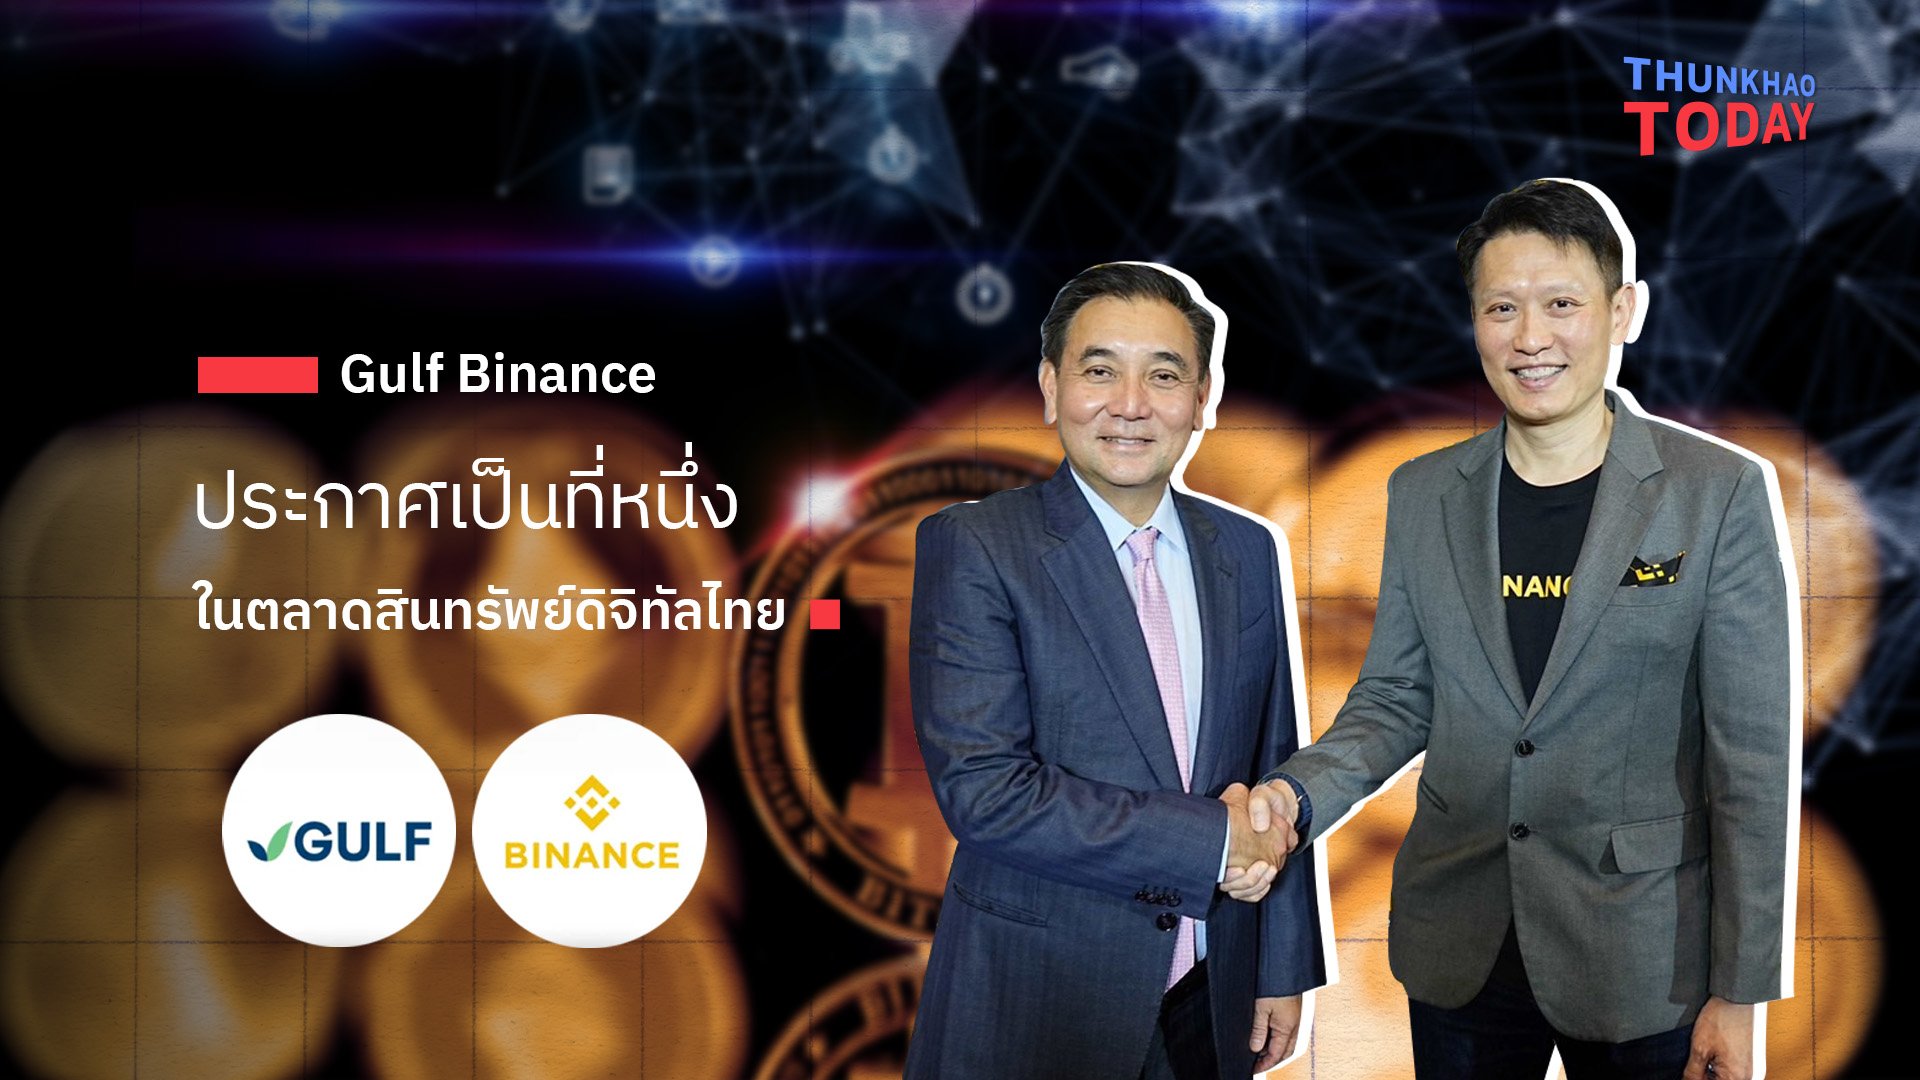 Gulf Binance ประกาศเป็นที่หนึ่ง ในตลาดสินทรัพย์ดิจิทัลไทย